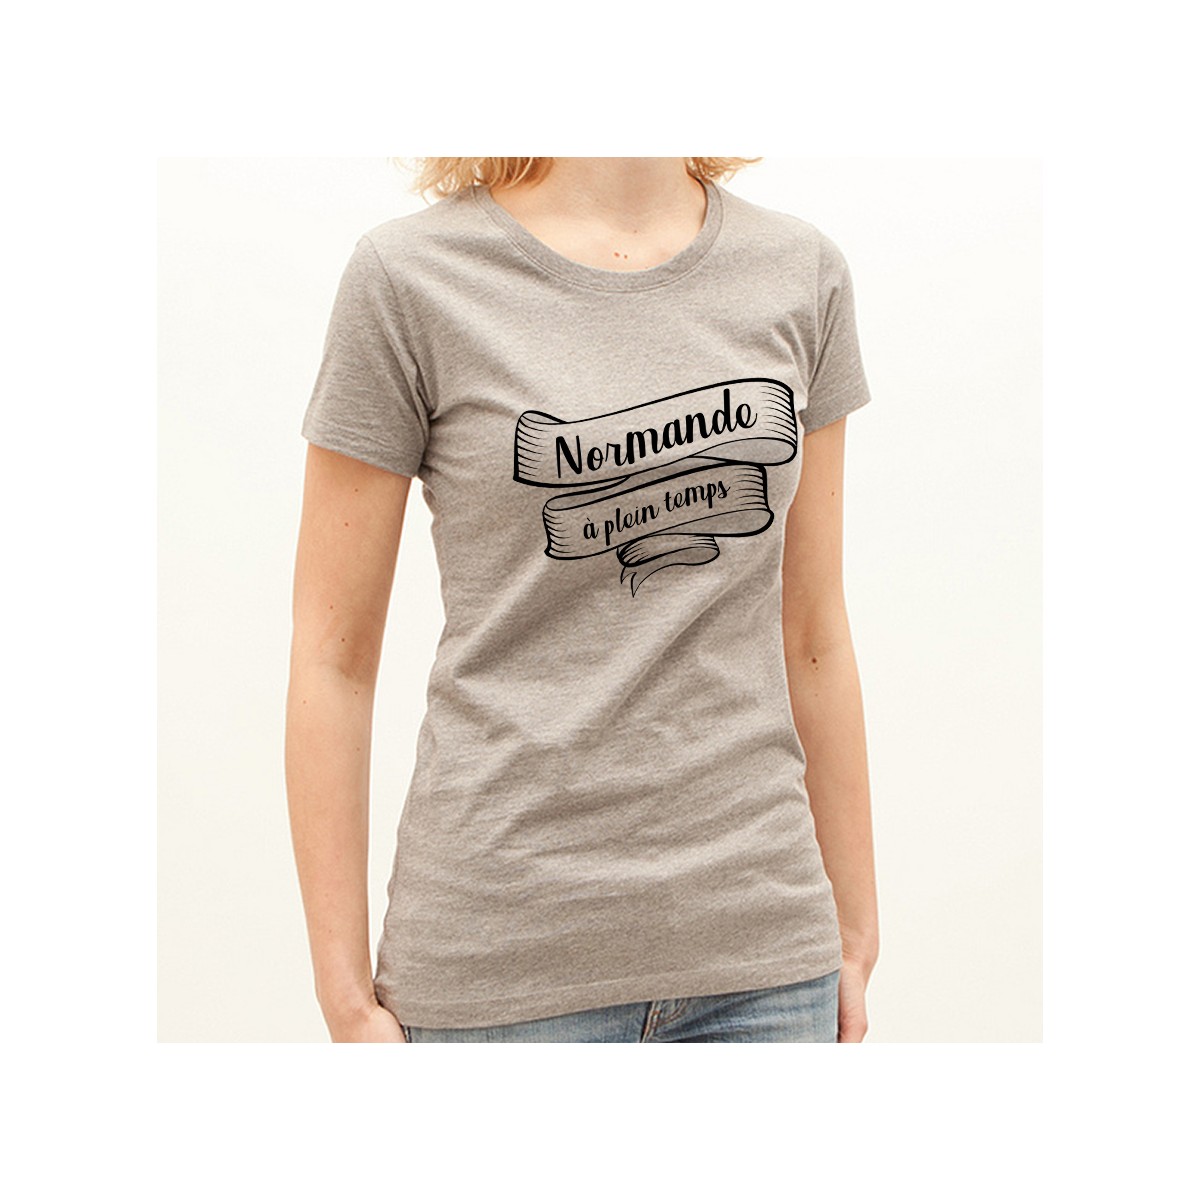 T-shirt Normande à plein temps